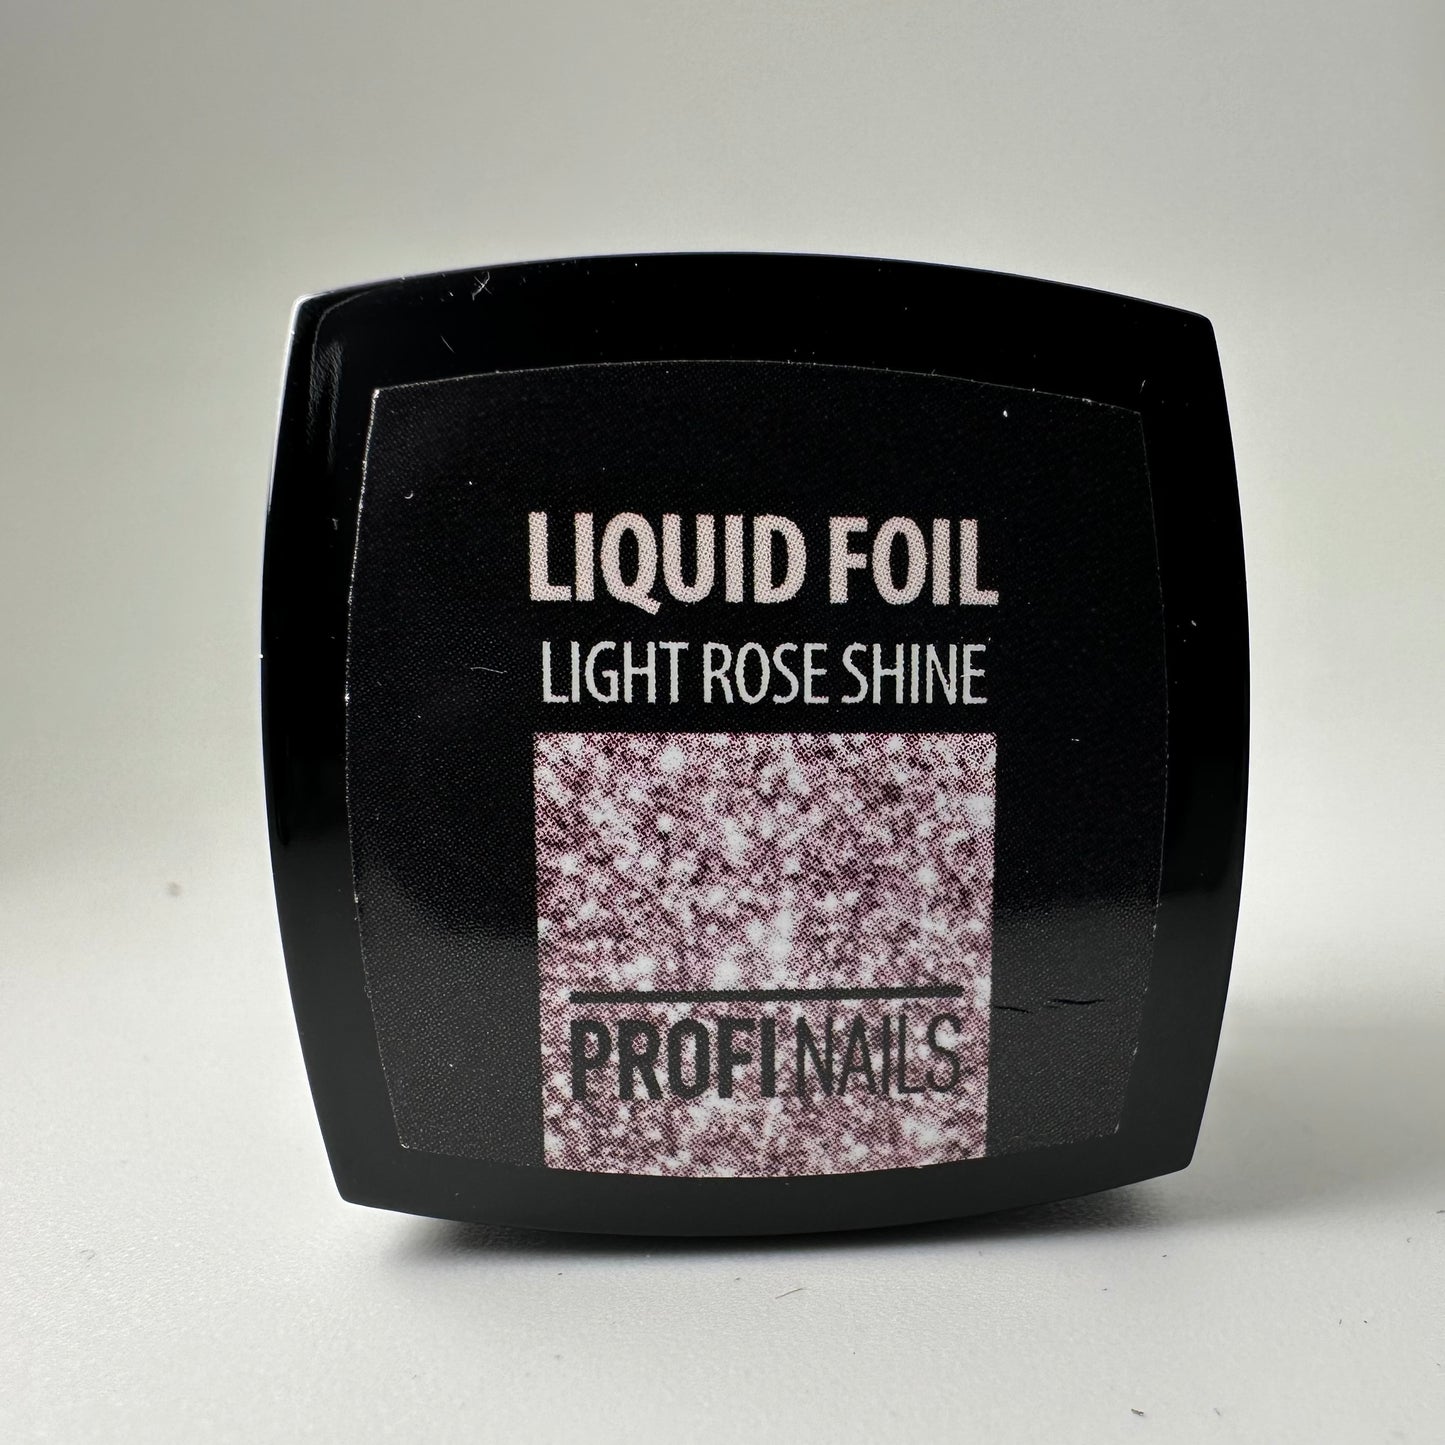 Liquid Foil Light Rose Shine